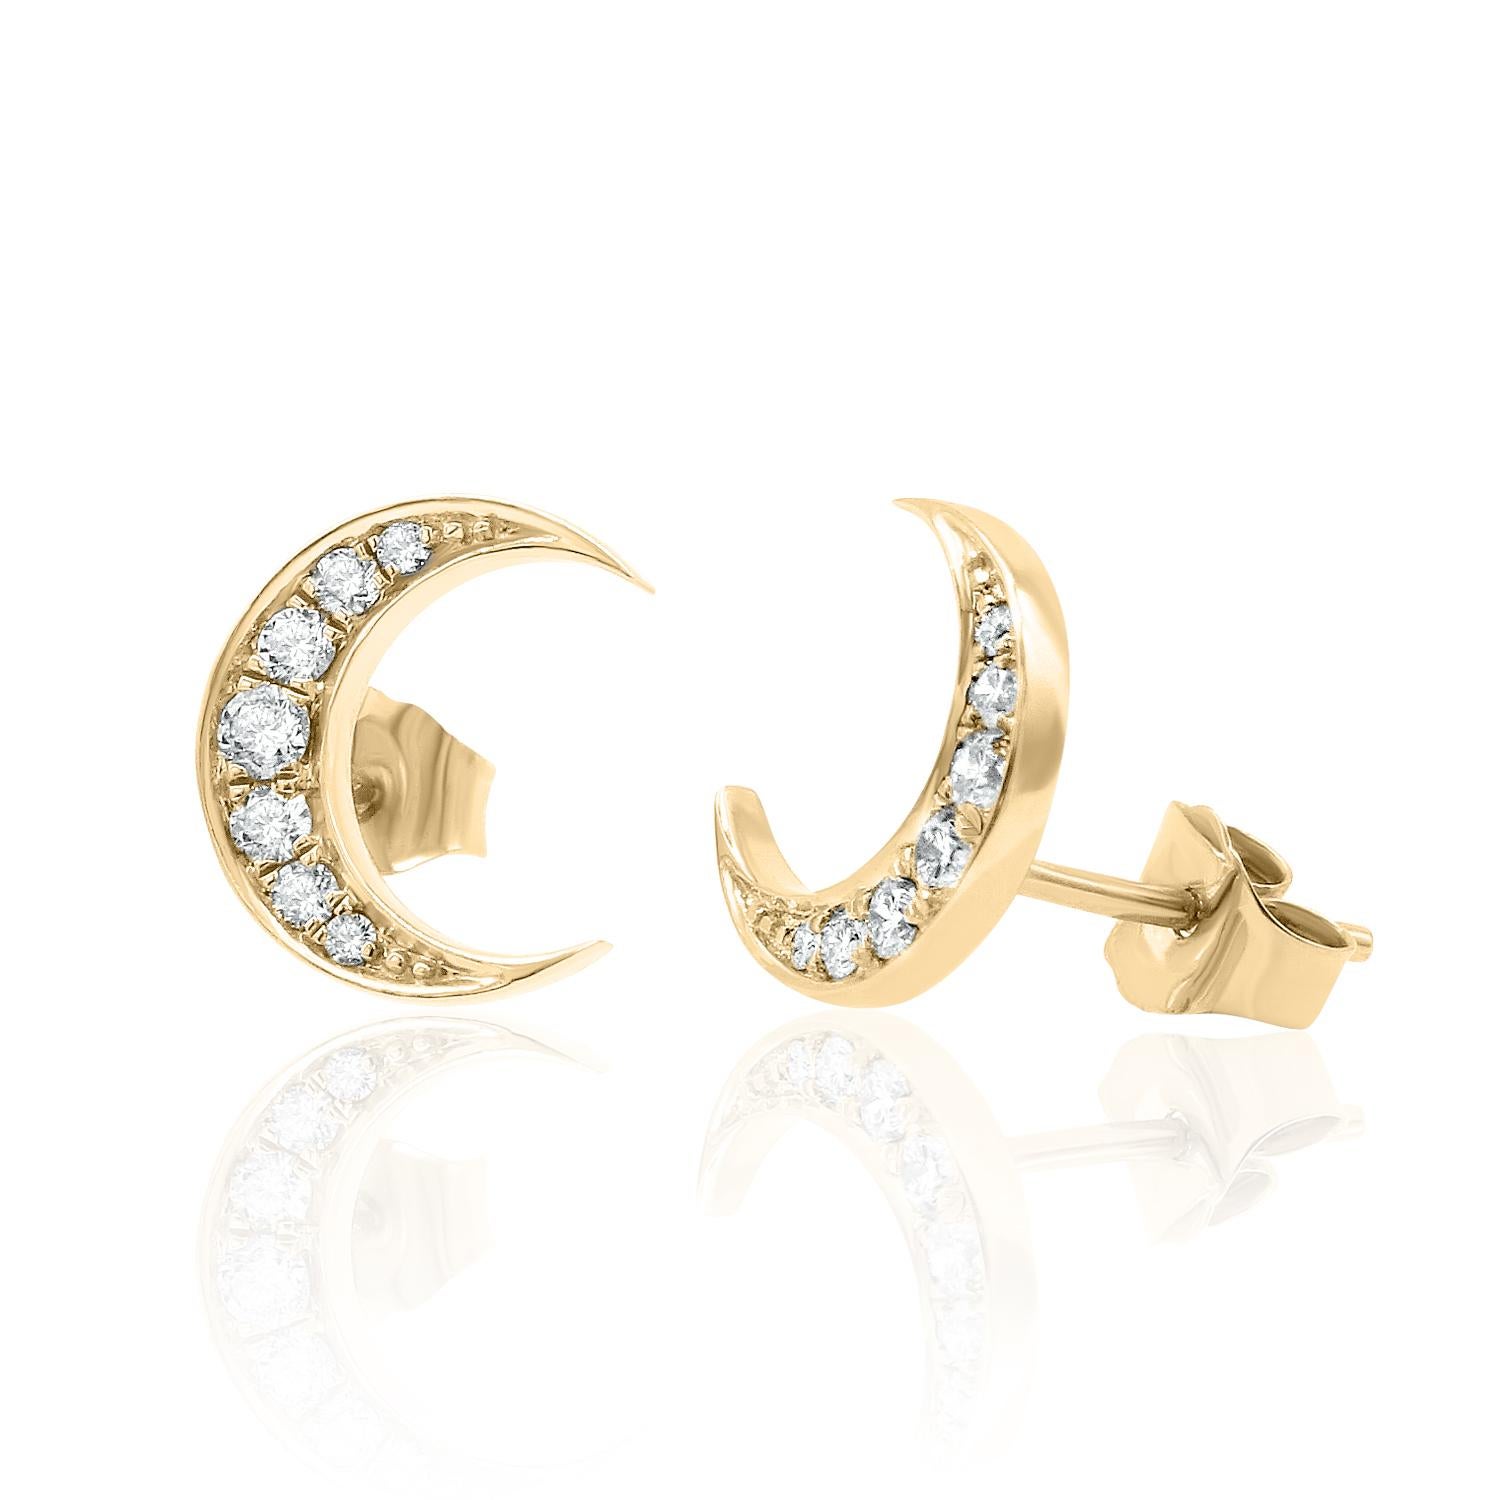 diamond moon earrings